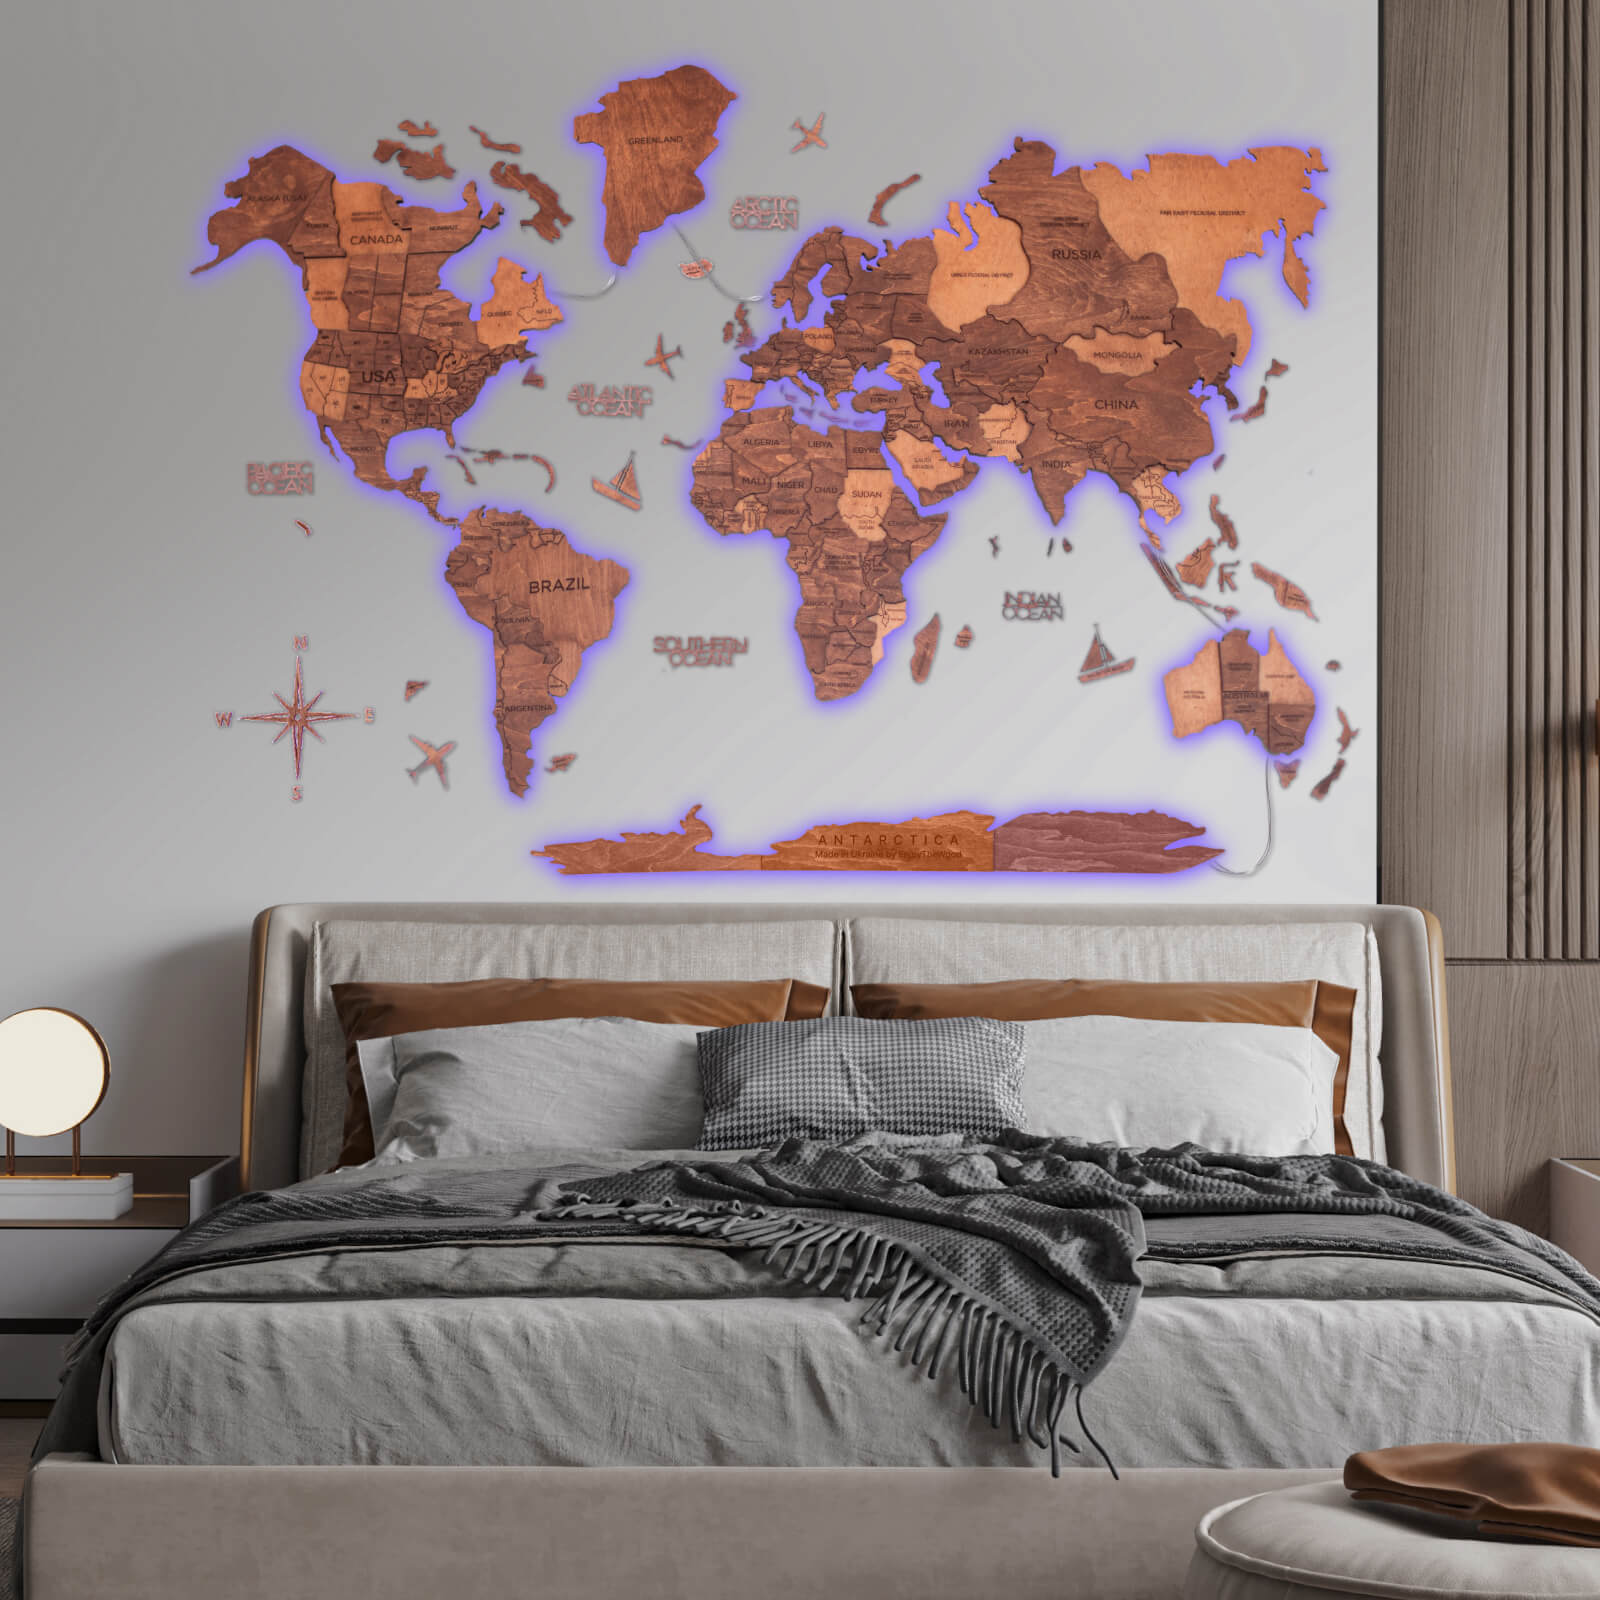 3D LED Wooden World Map 3.0 Oak